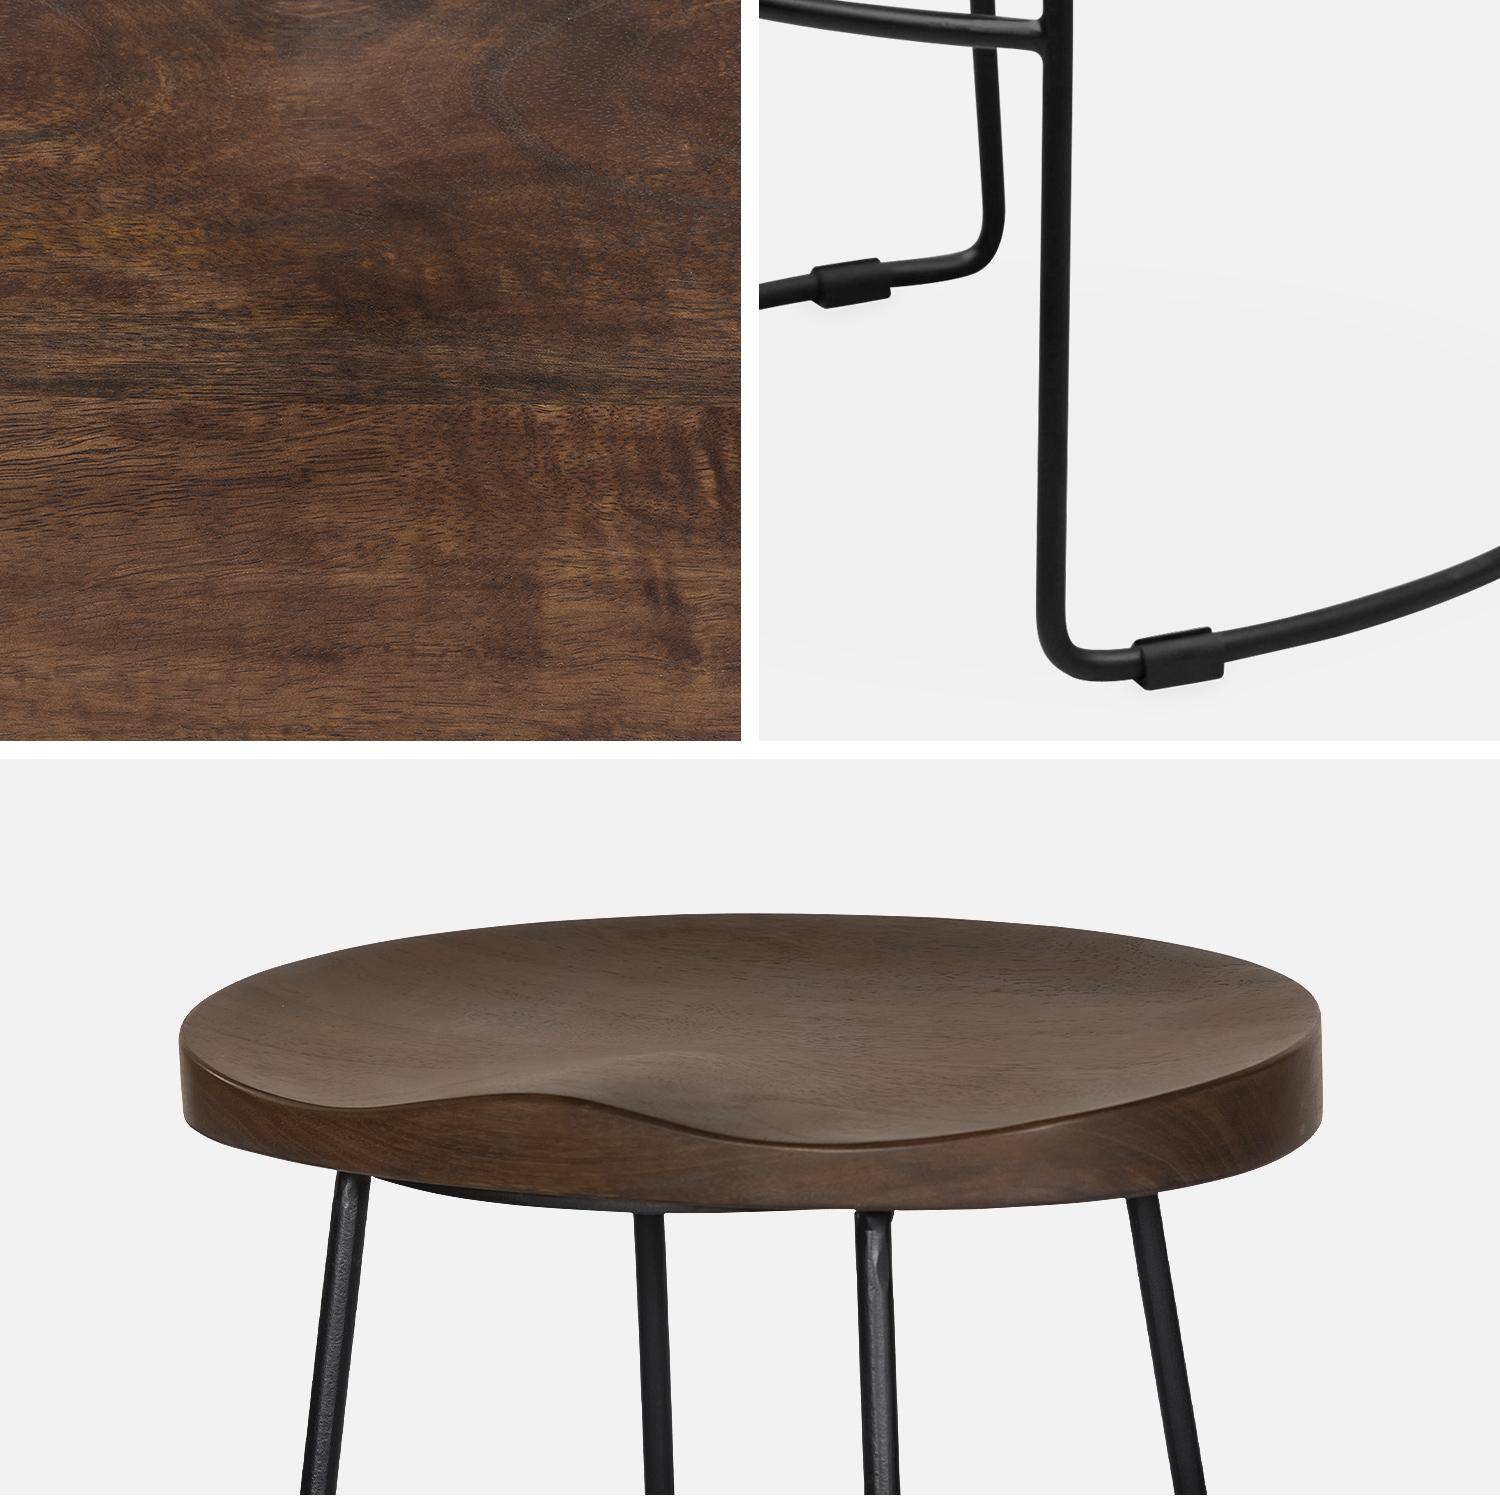 Pair of industrial metal and wooden bar stools, 47x40x75cm, Jaya, Light Walnut, Mango wood seat, black metal legs Photo7